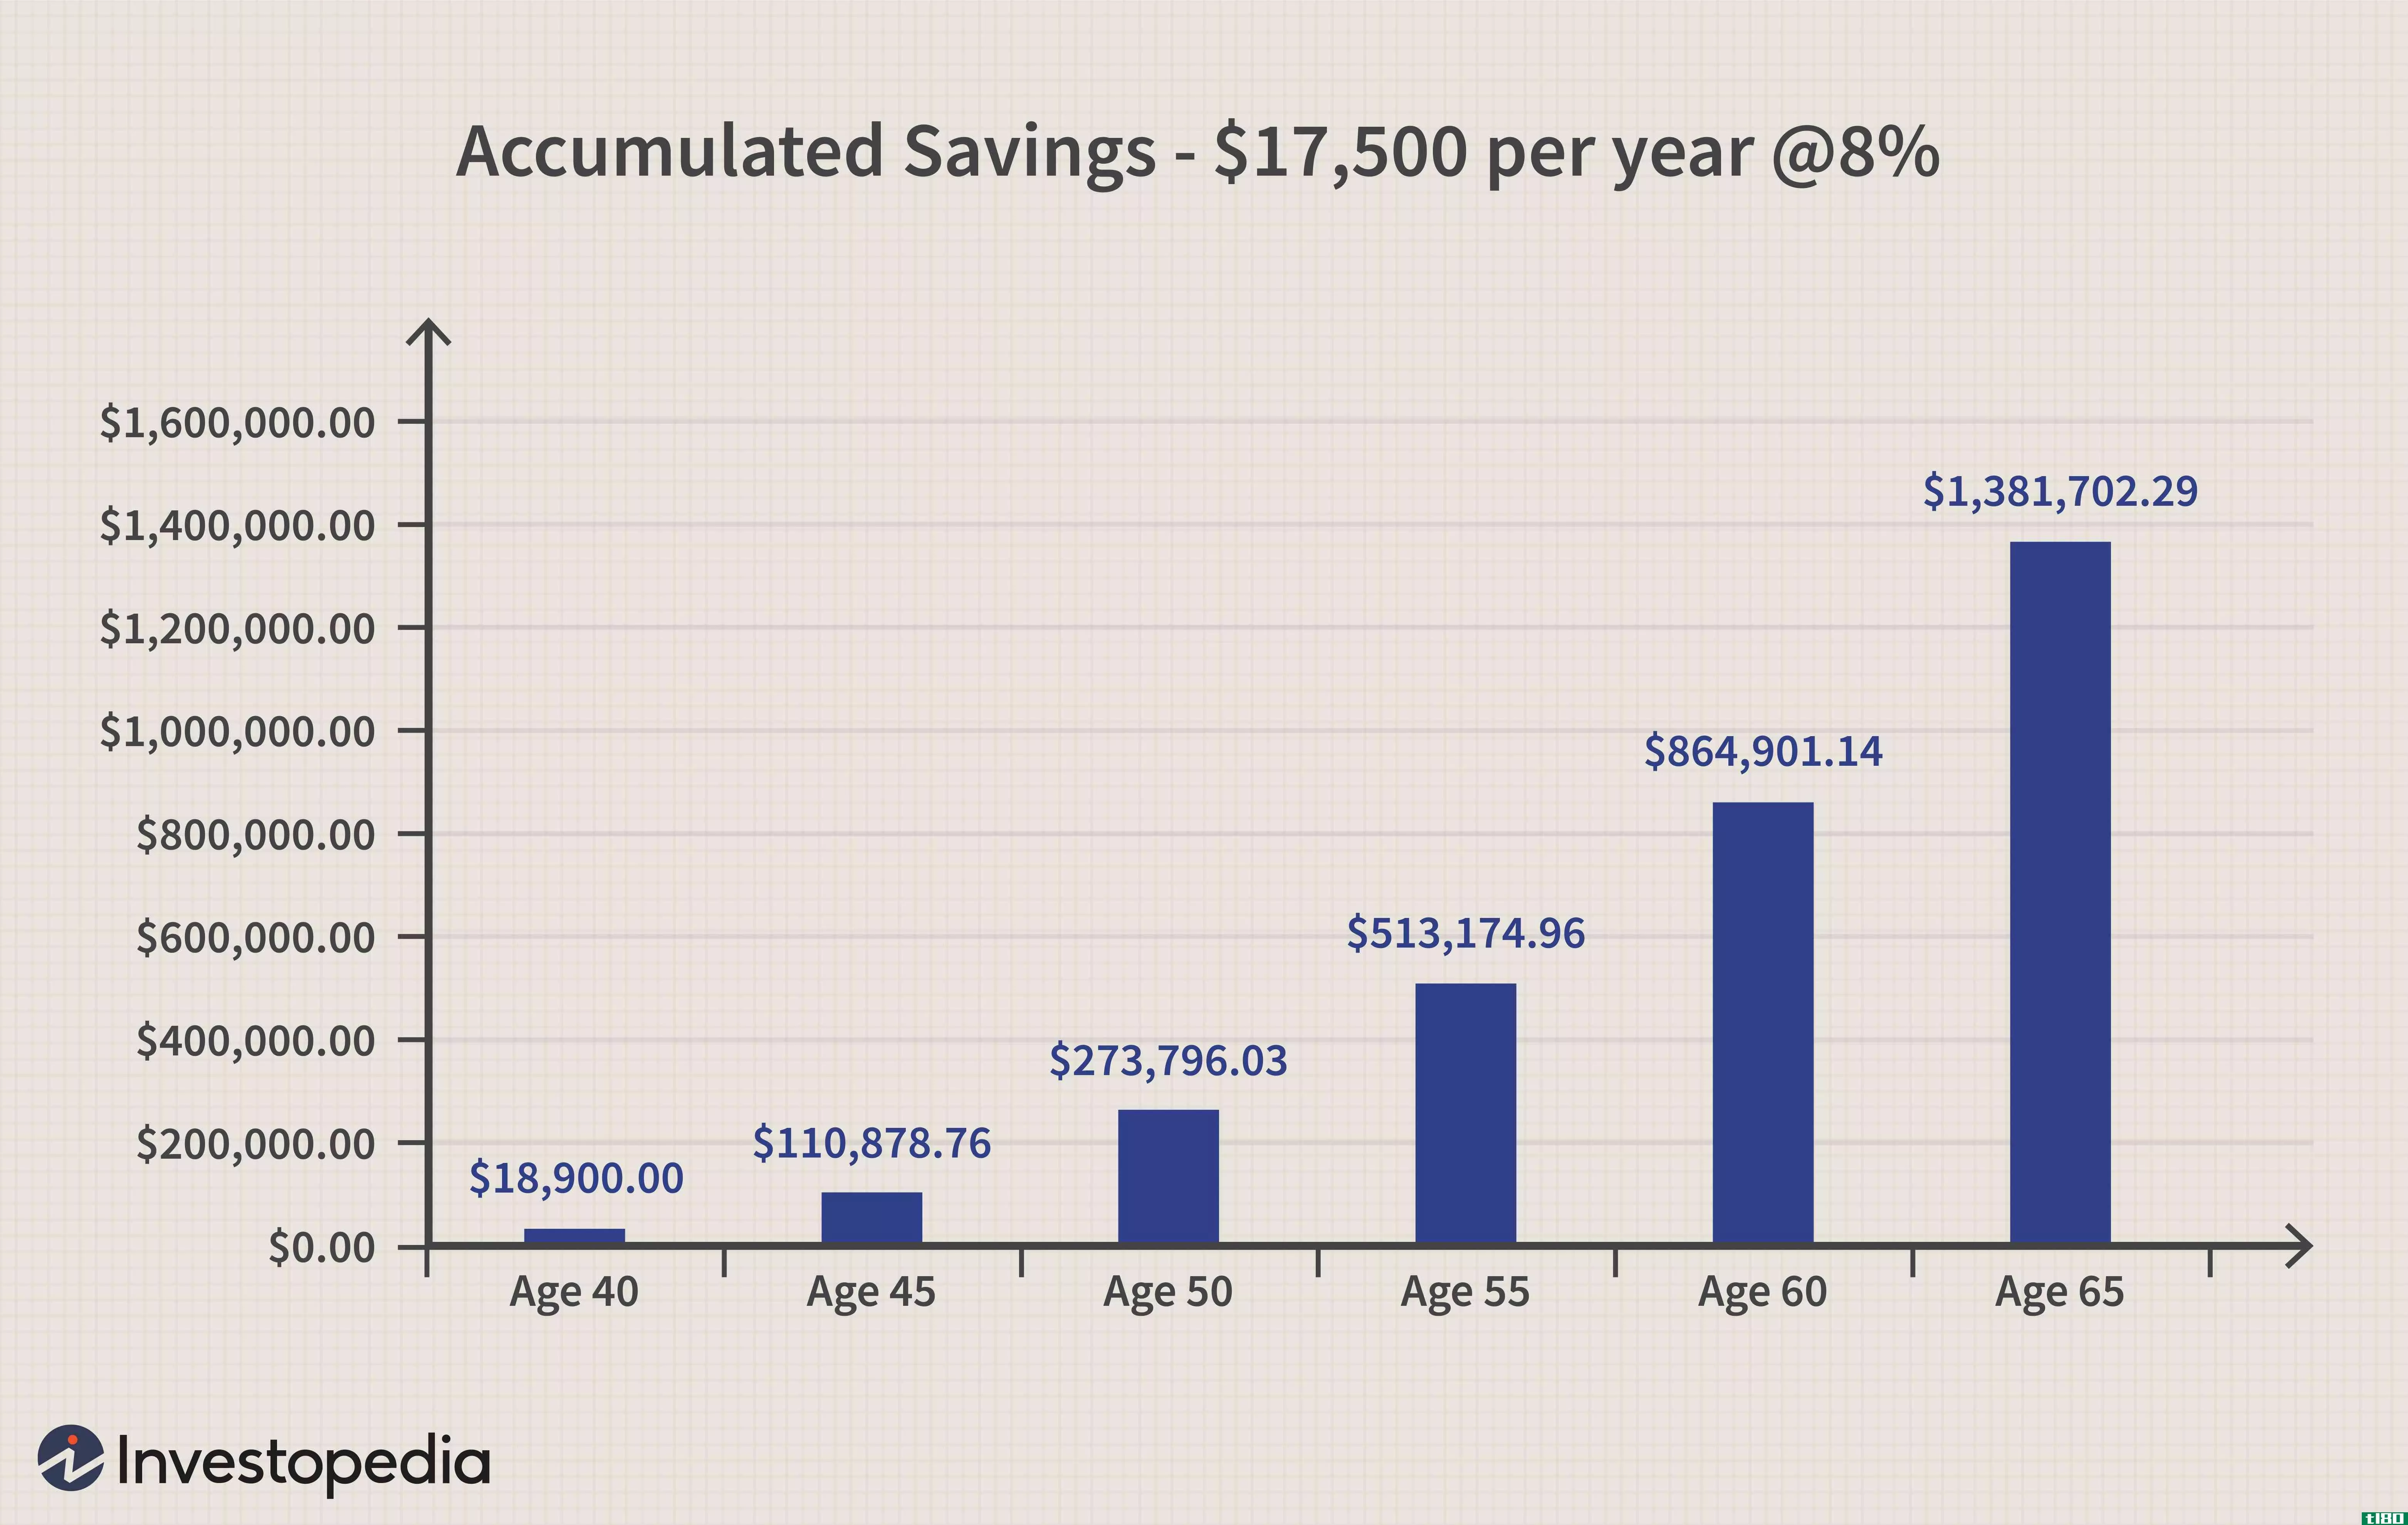 Accumulated Savings